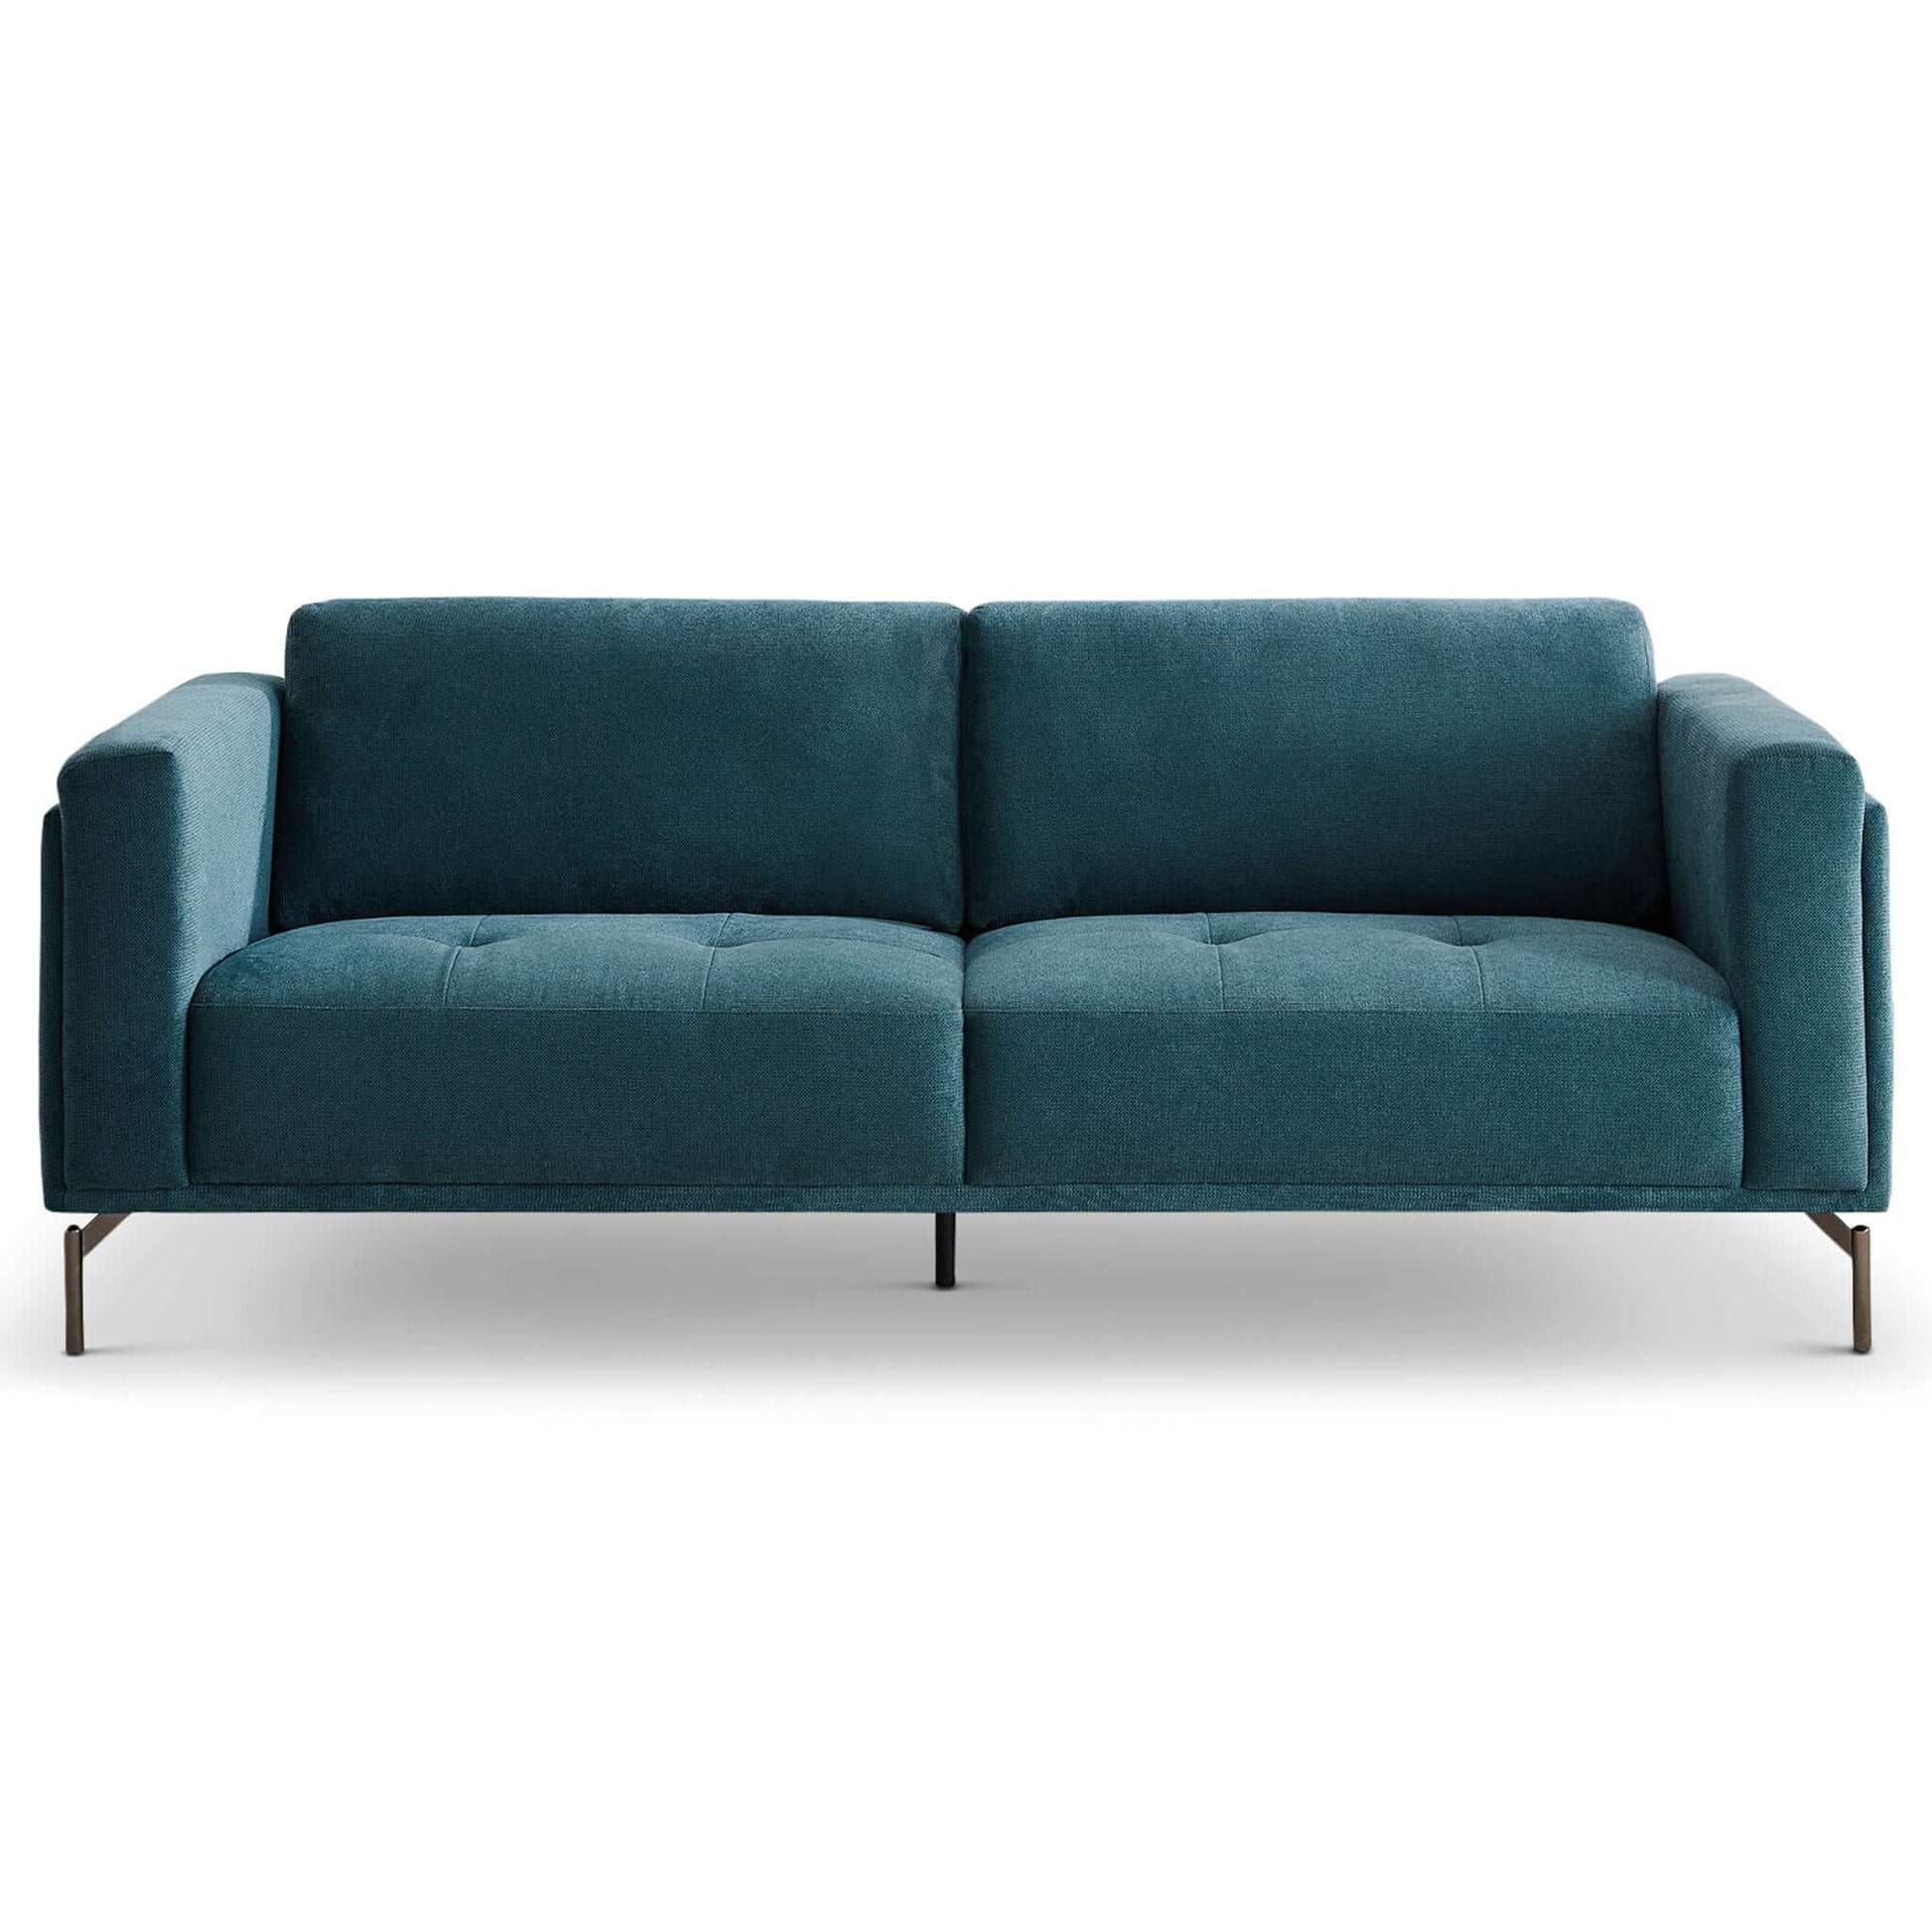 Ashcroft Furniture Co Sofas Lanchester Mid Century Modern Blue Linen Sofa